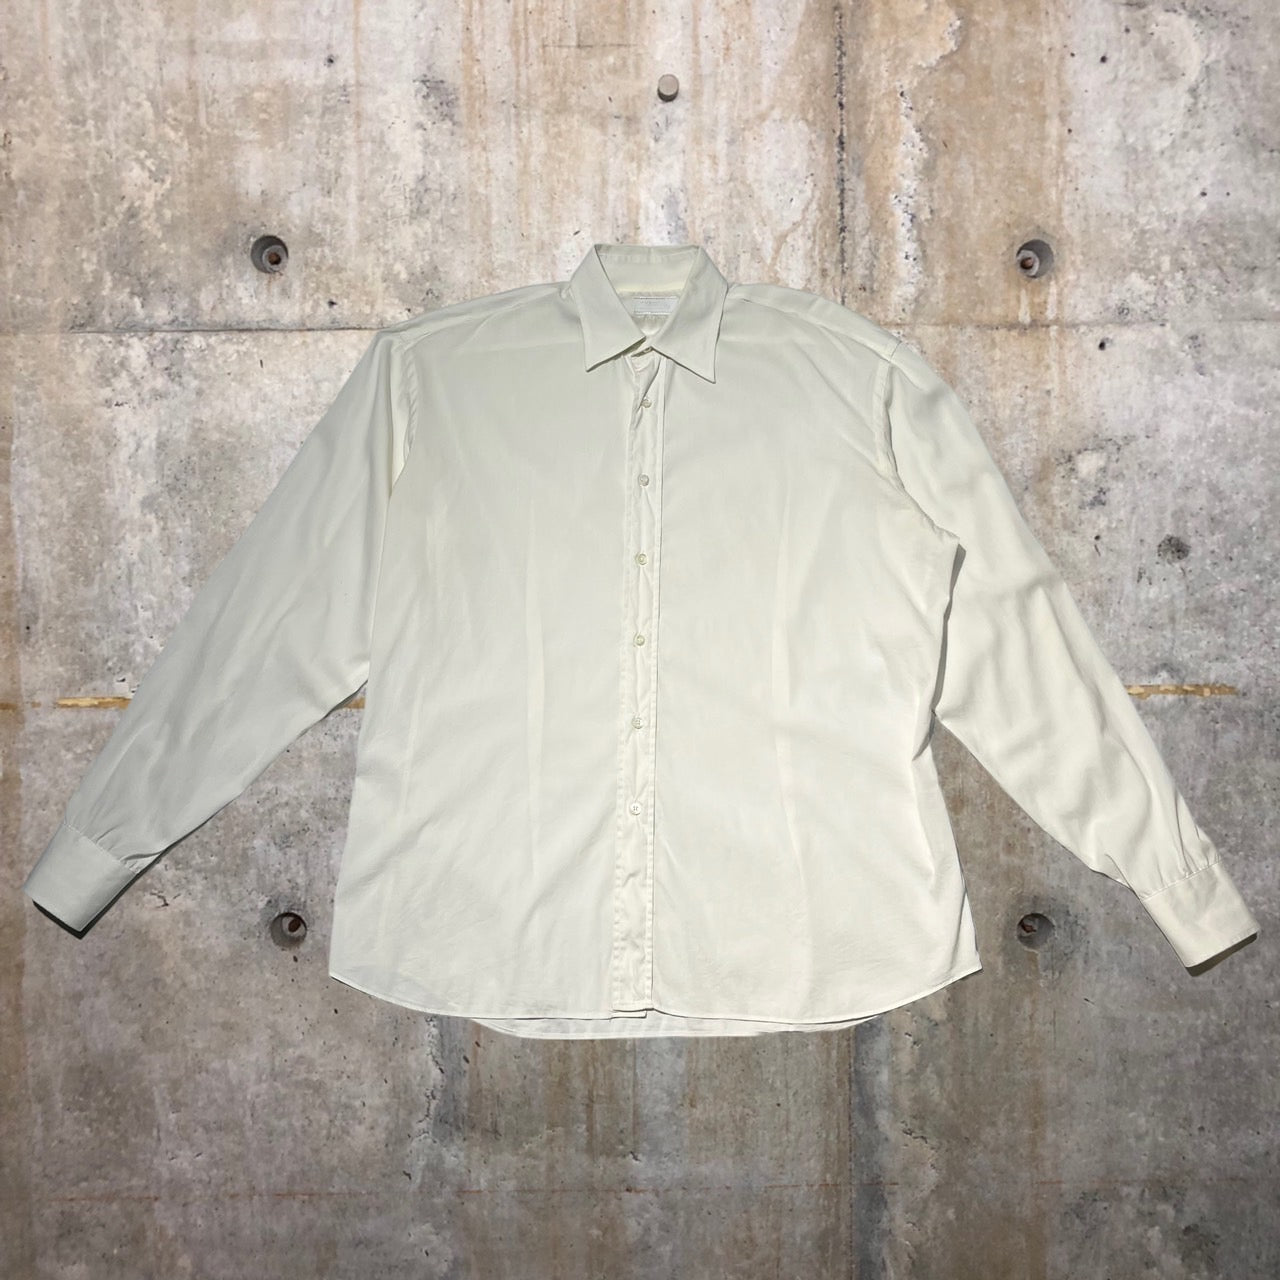 PRADA(プラダ) 00'sオーバーサイズシャツ 41/16(XLサイズ程度) ホワイト 07SS~ Archive アーカイブ